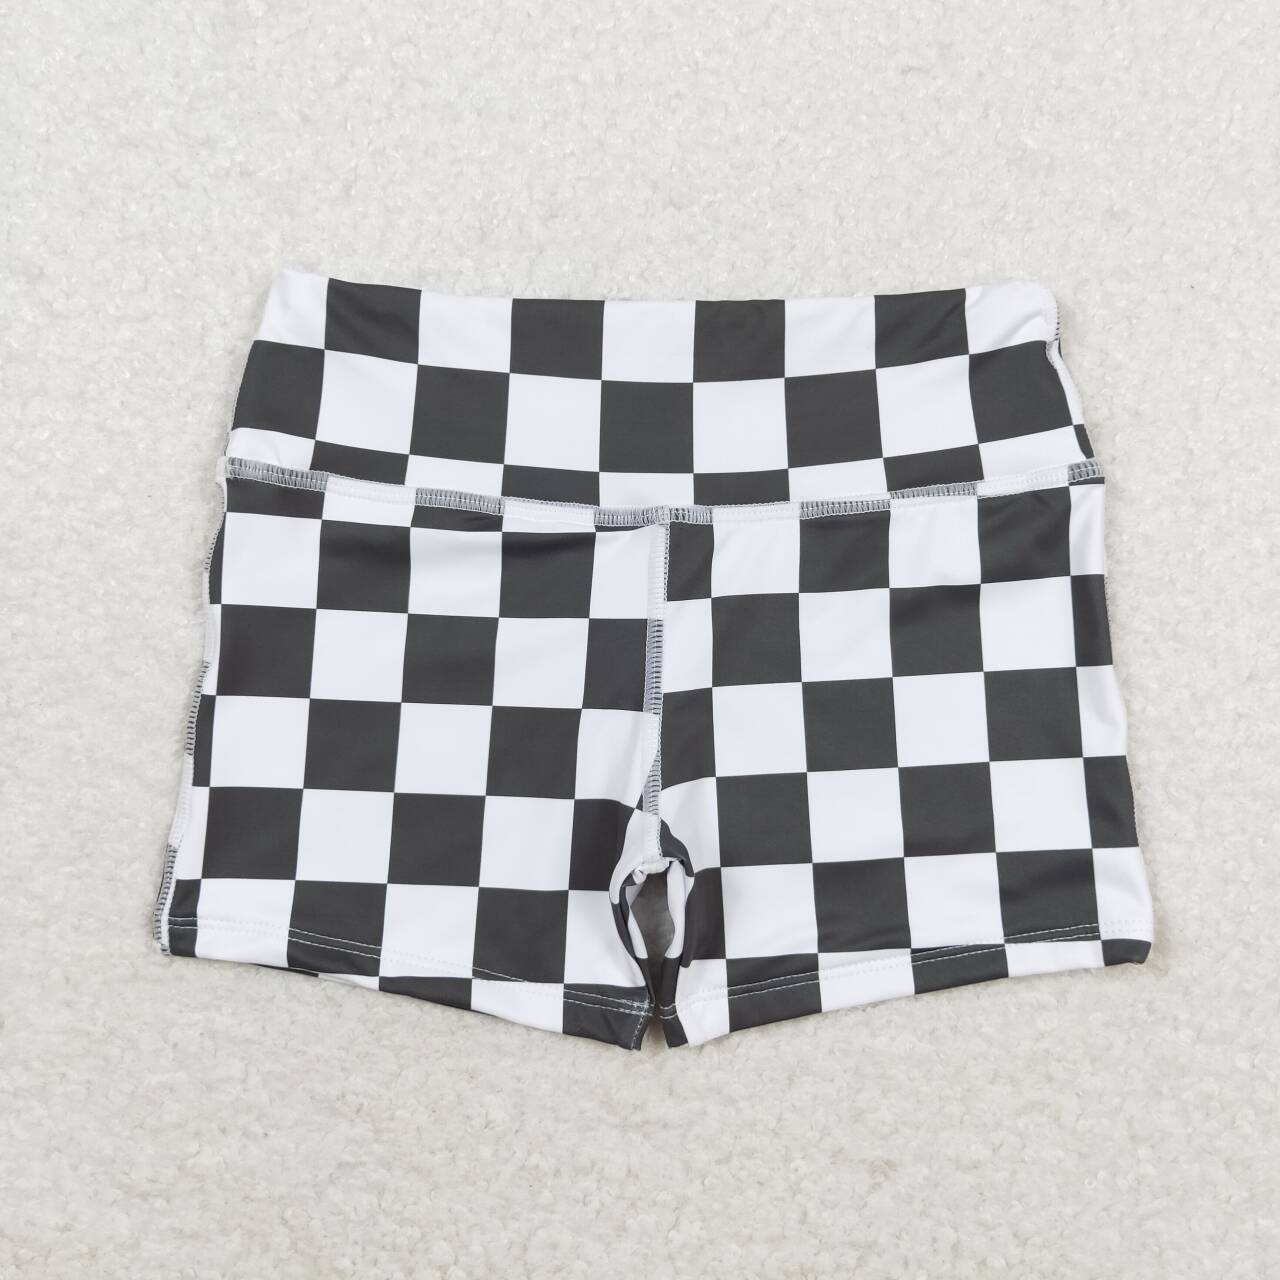 SS0219 Black and white plaid shorts